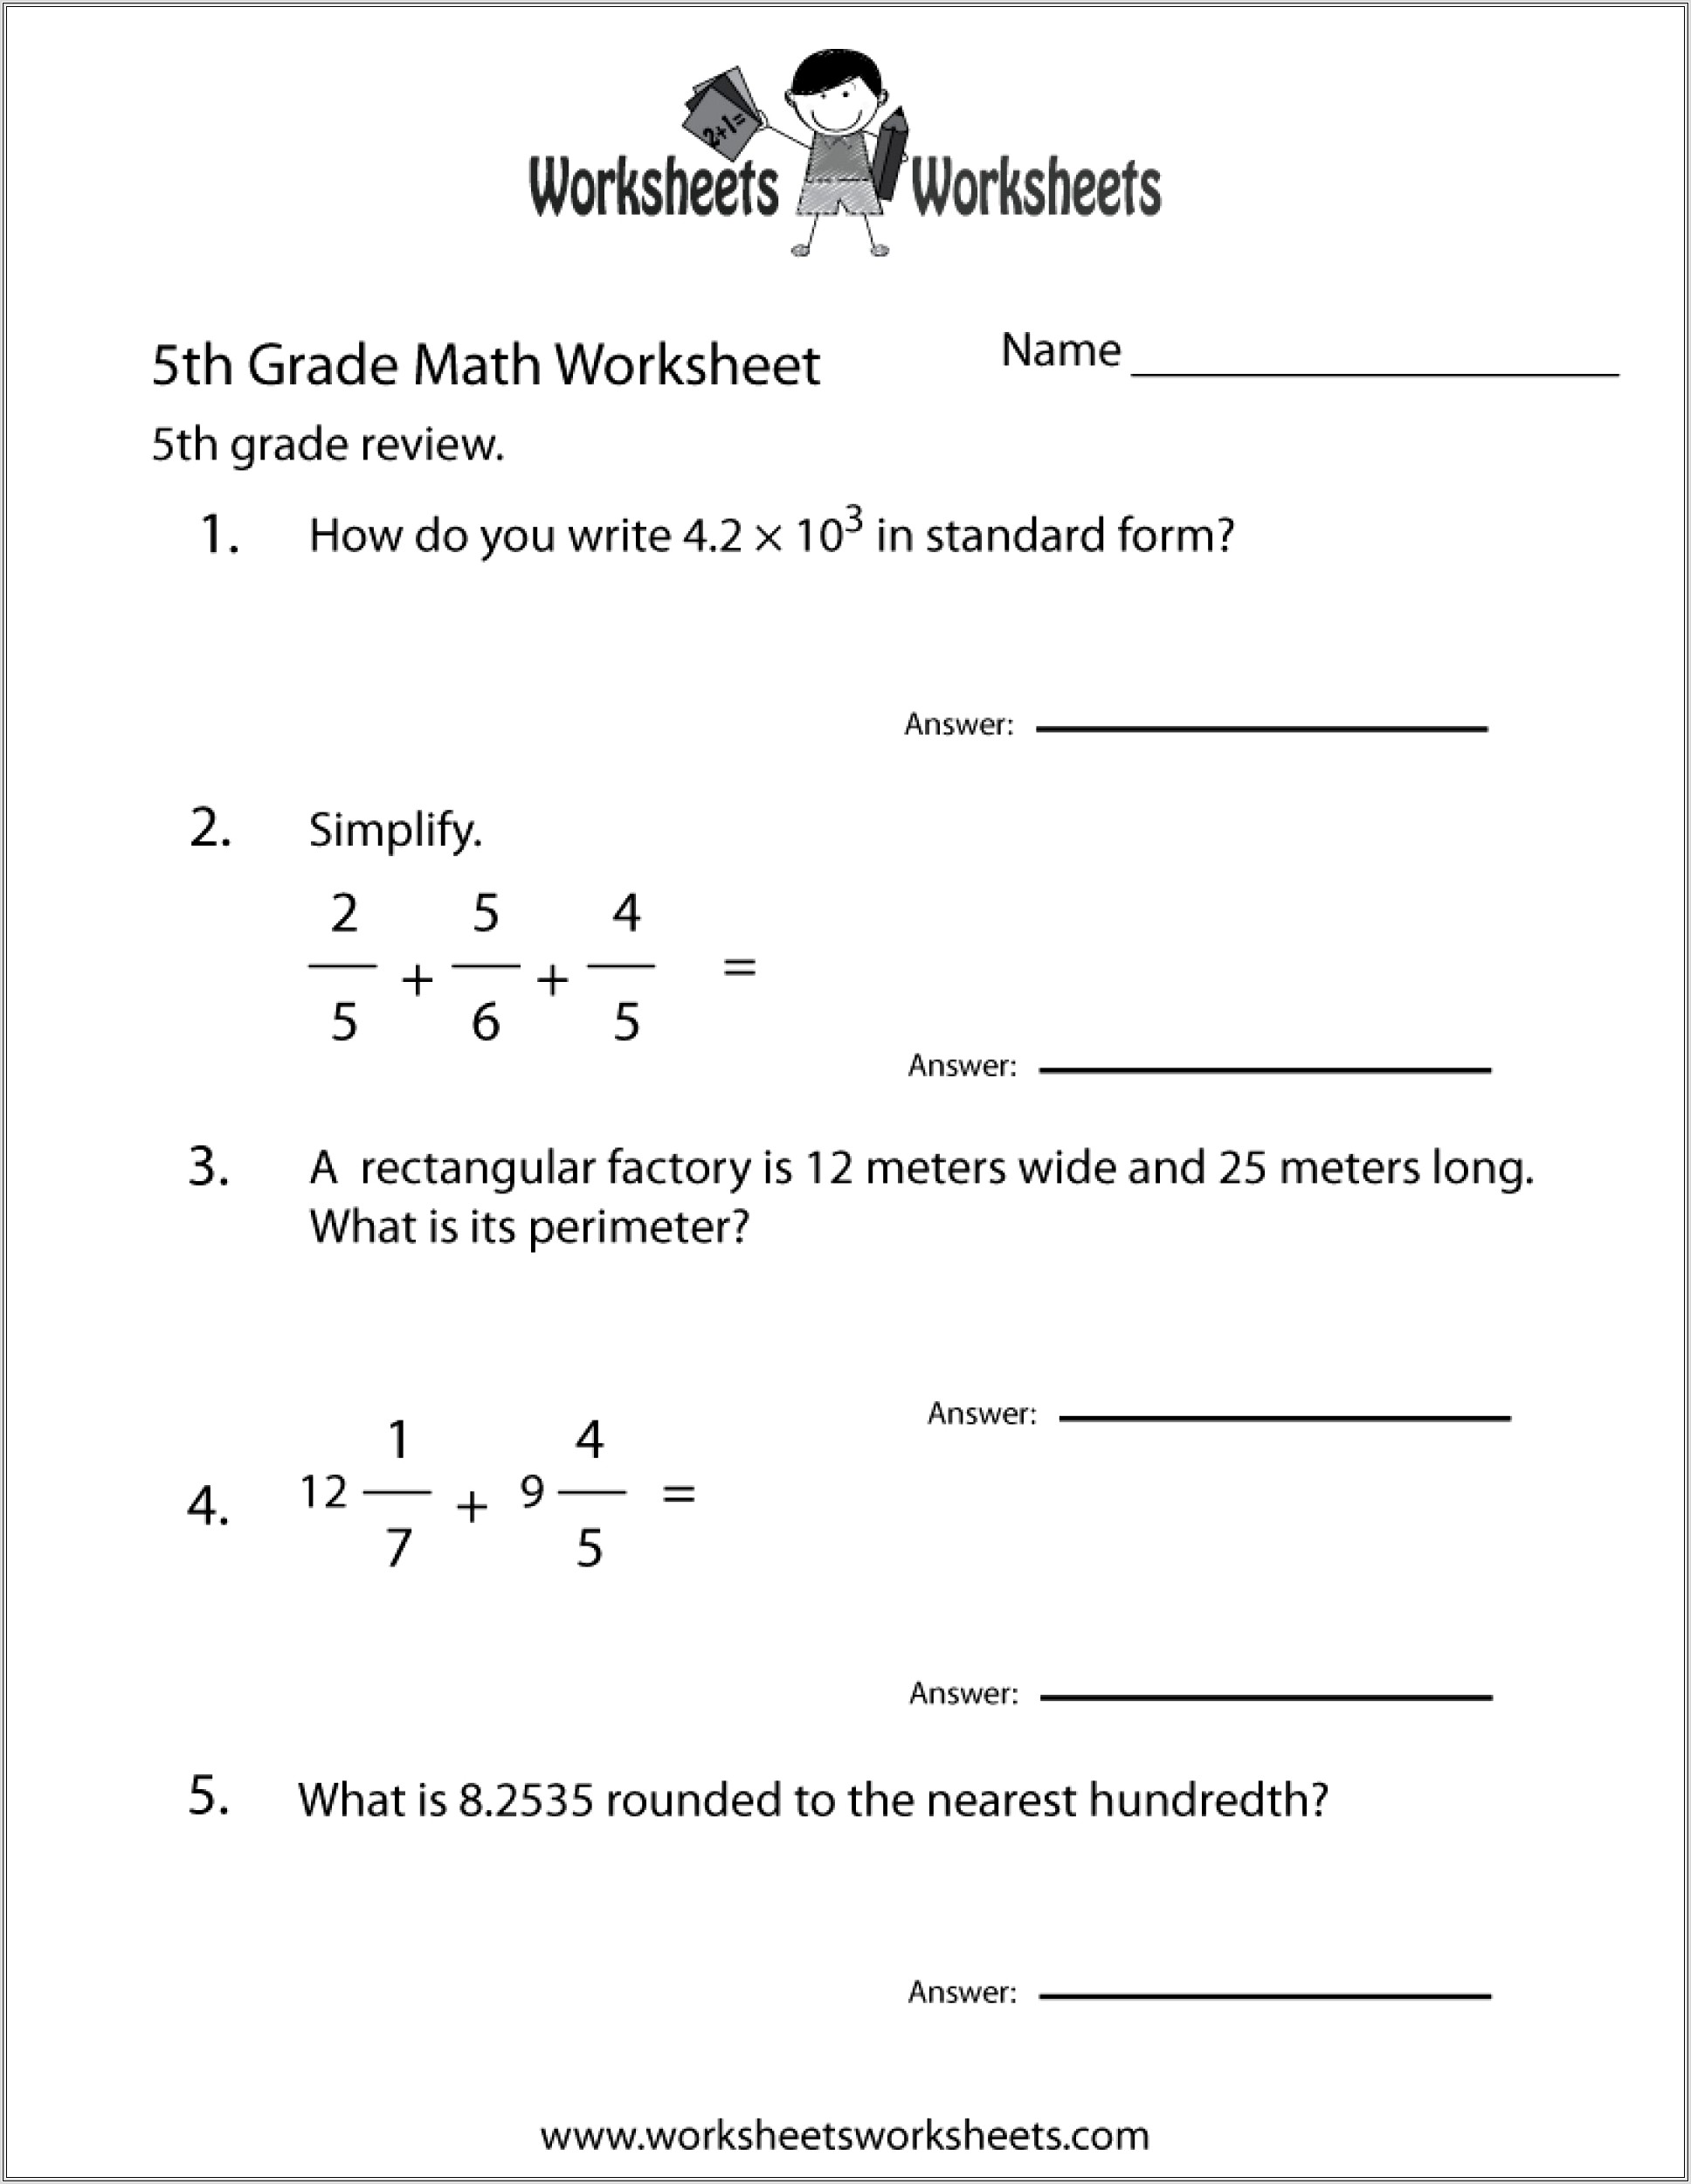 5th Grade Math Review Worksheet Pdf